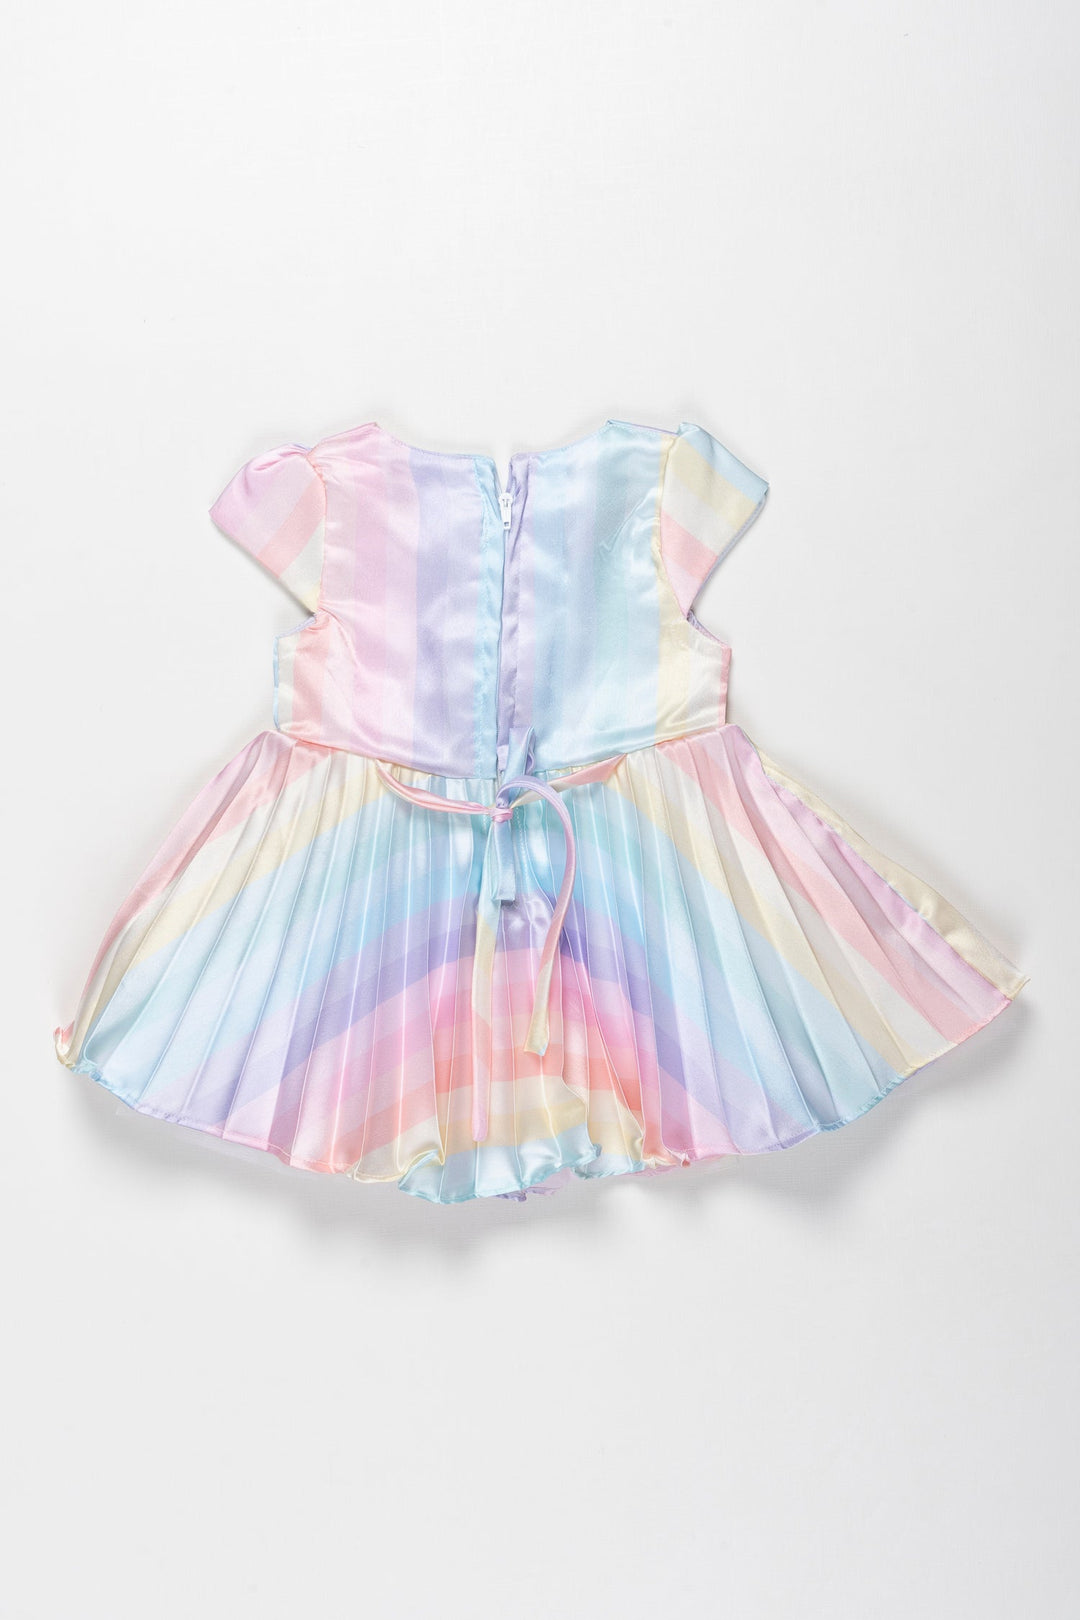 The Nesavu Baby Fancy Frock Pastel Rainbow Magic Sequin Dress for Baby Girls Nesavu Pastel Sequined Newborn Dress | Infant Magic Party Wear | The Nesavu